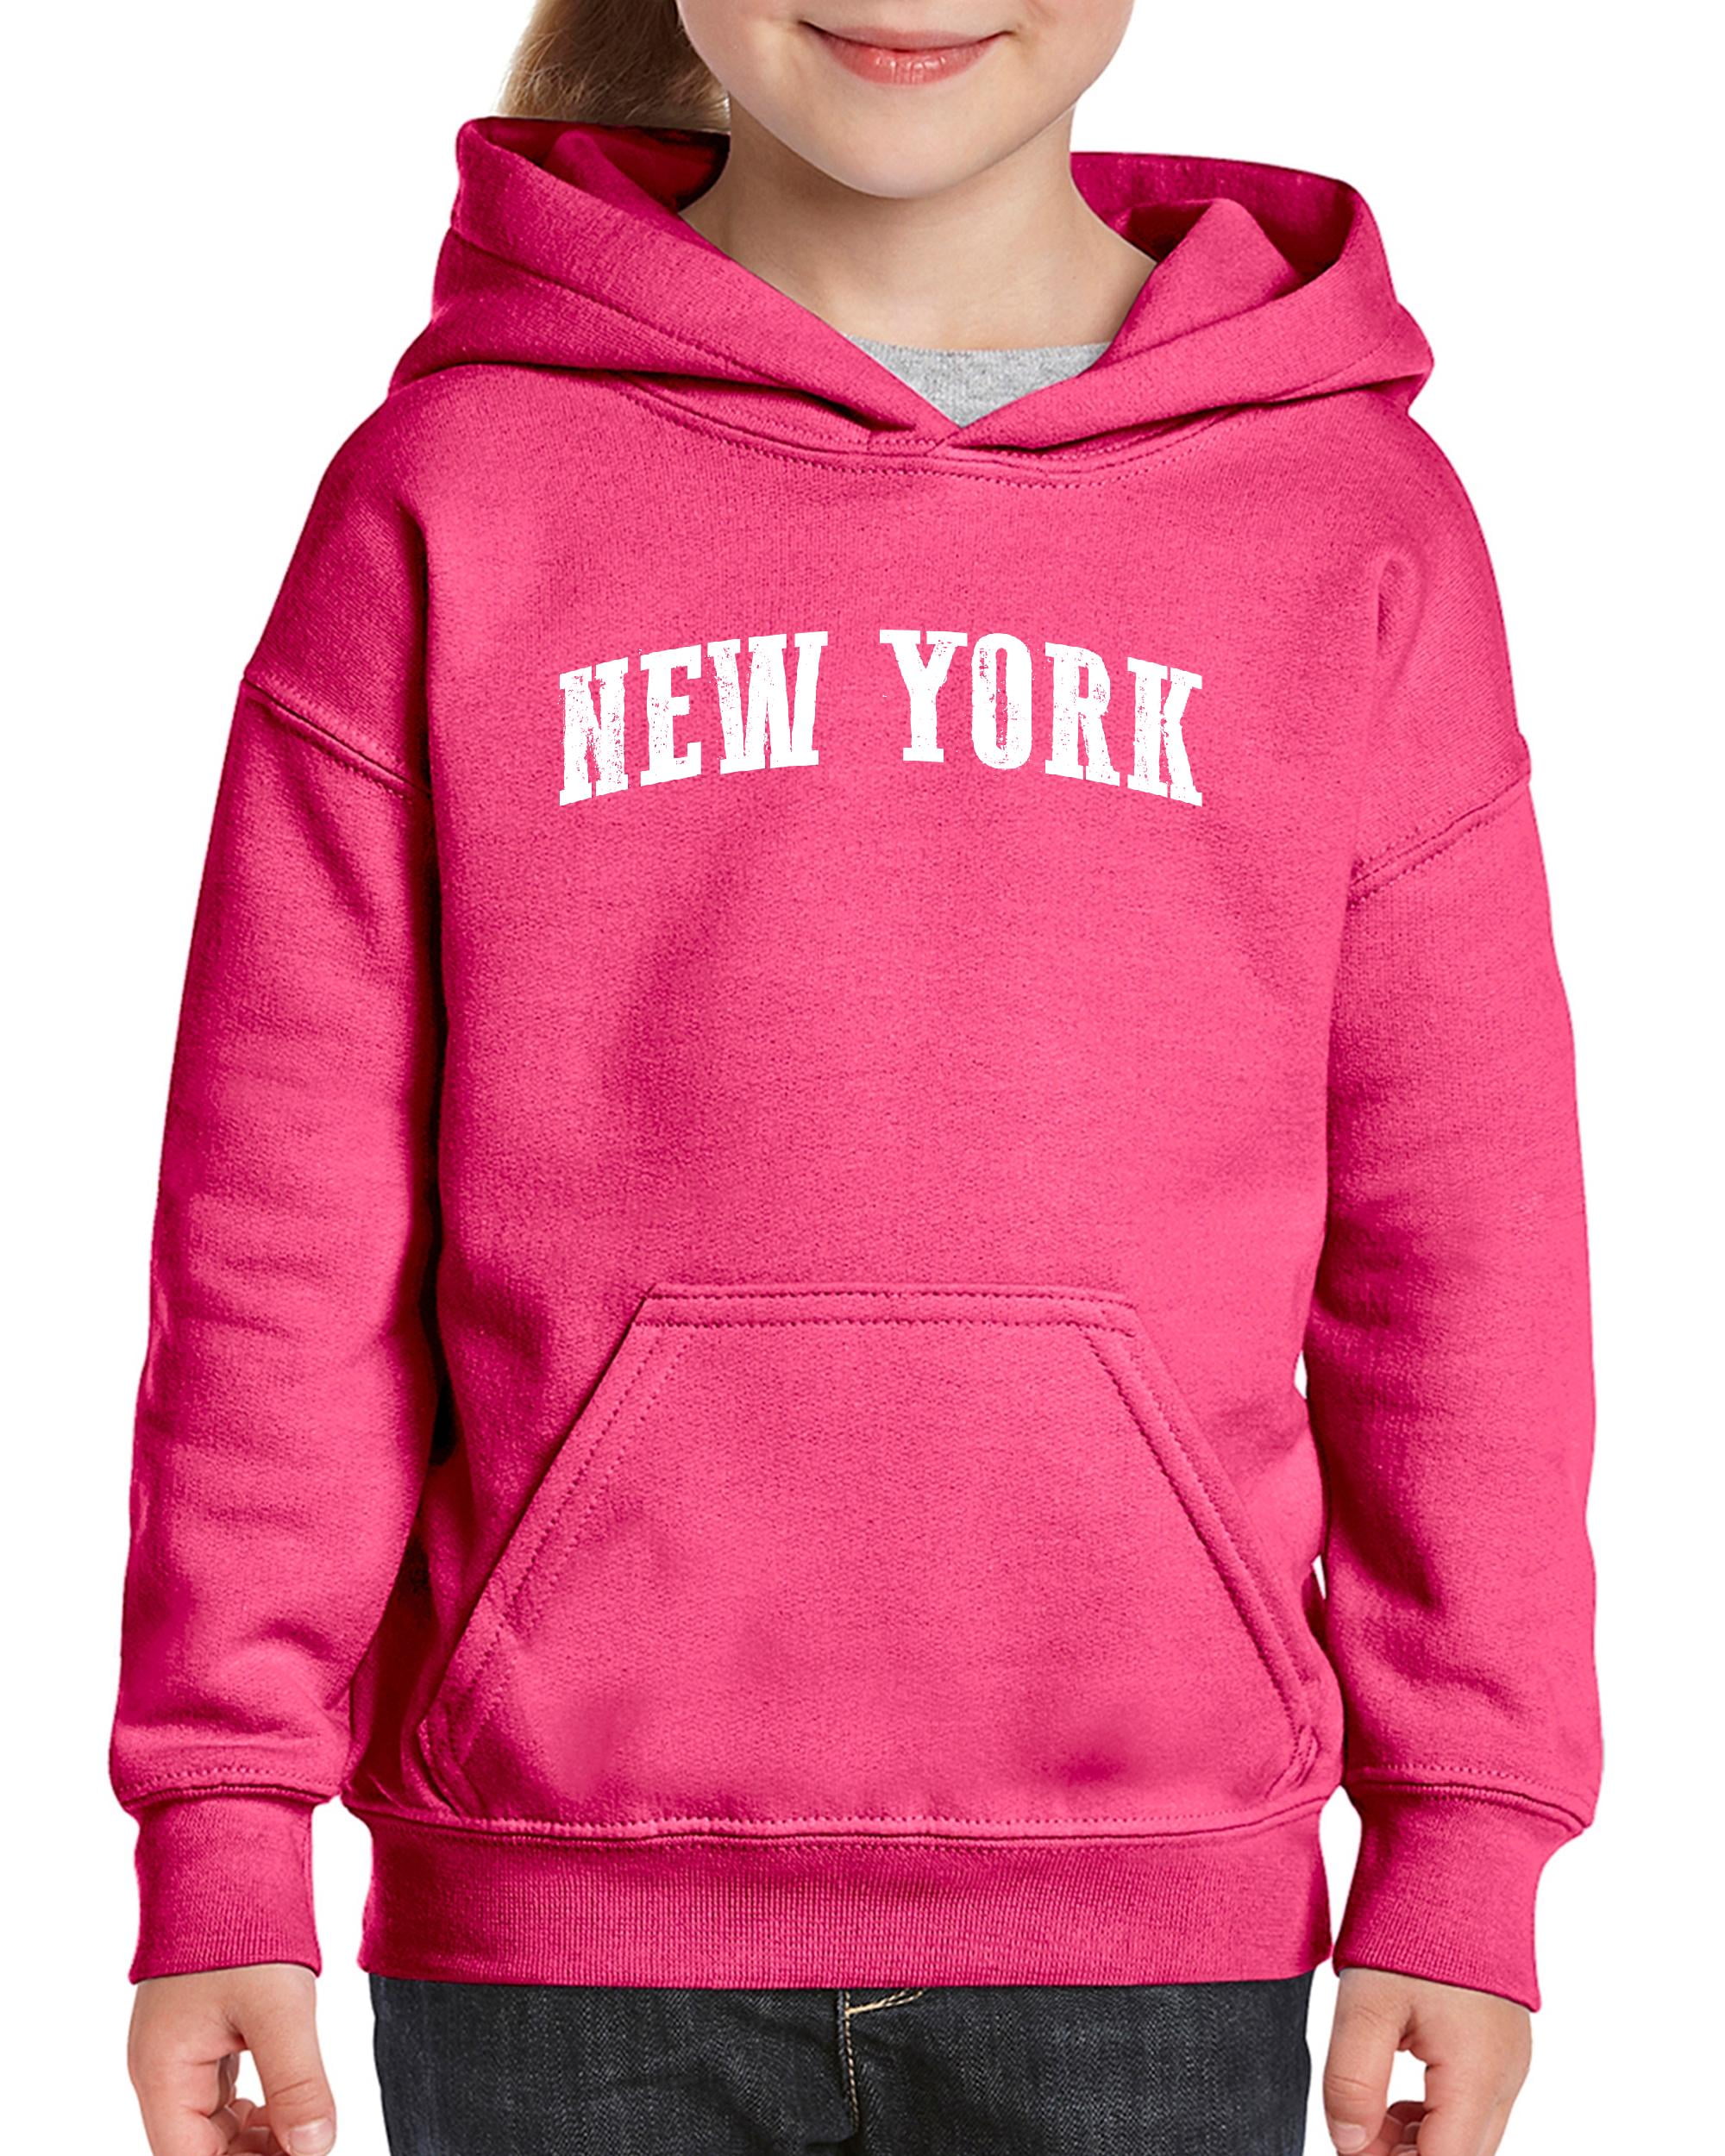 IWPF - Big Girls Hoodies and Sweatshirts - New York City 